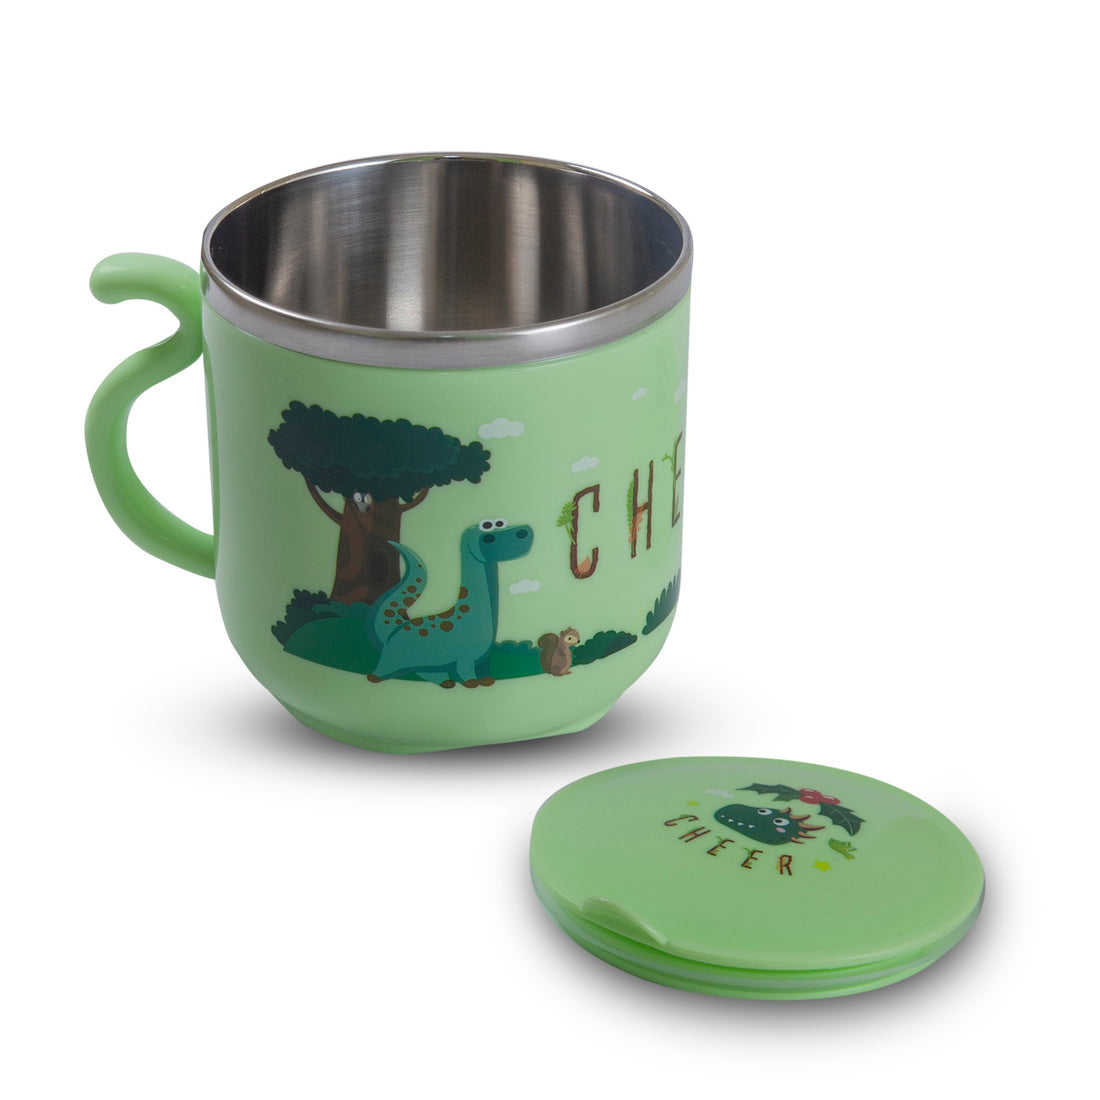 Cute Steel Cups/Mugs with Lids